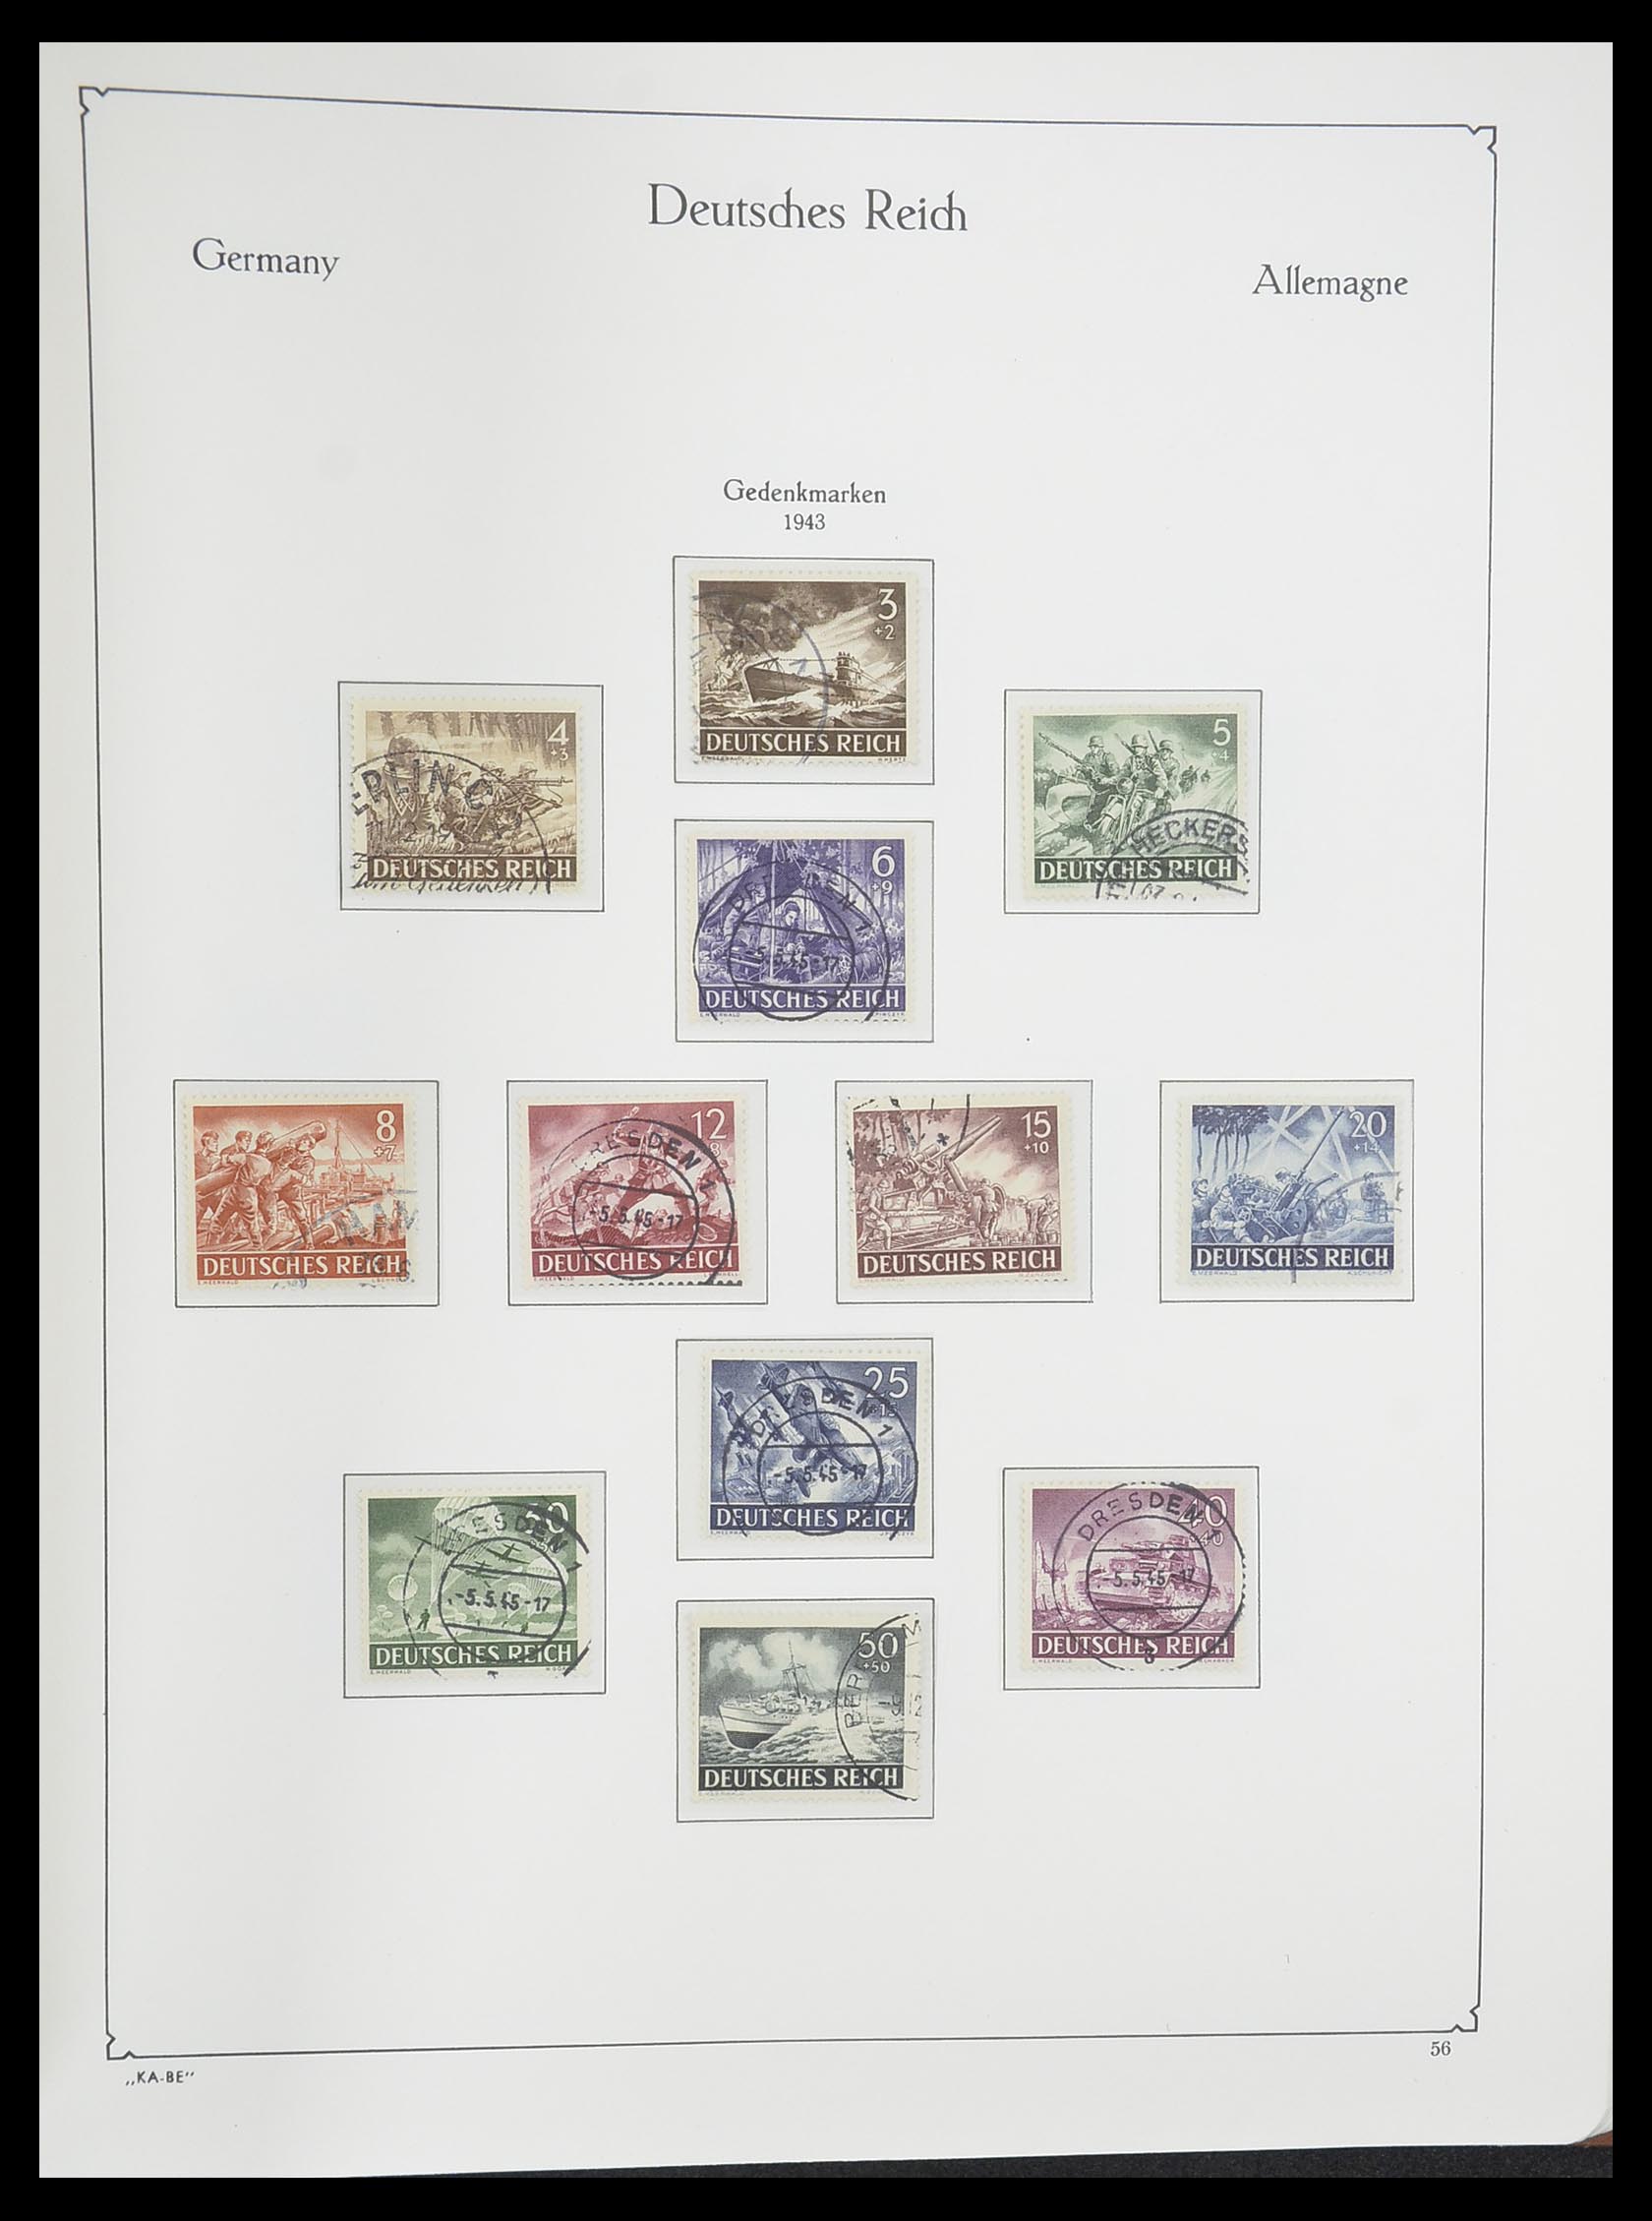 33358 072 - Stamp collection 33358 German Reich 1933-1945.